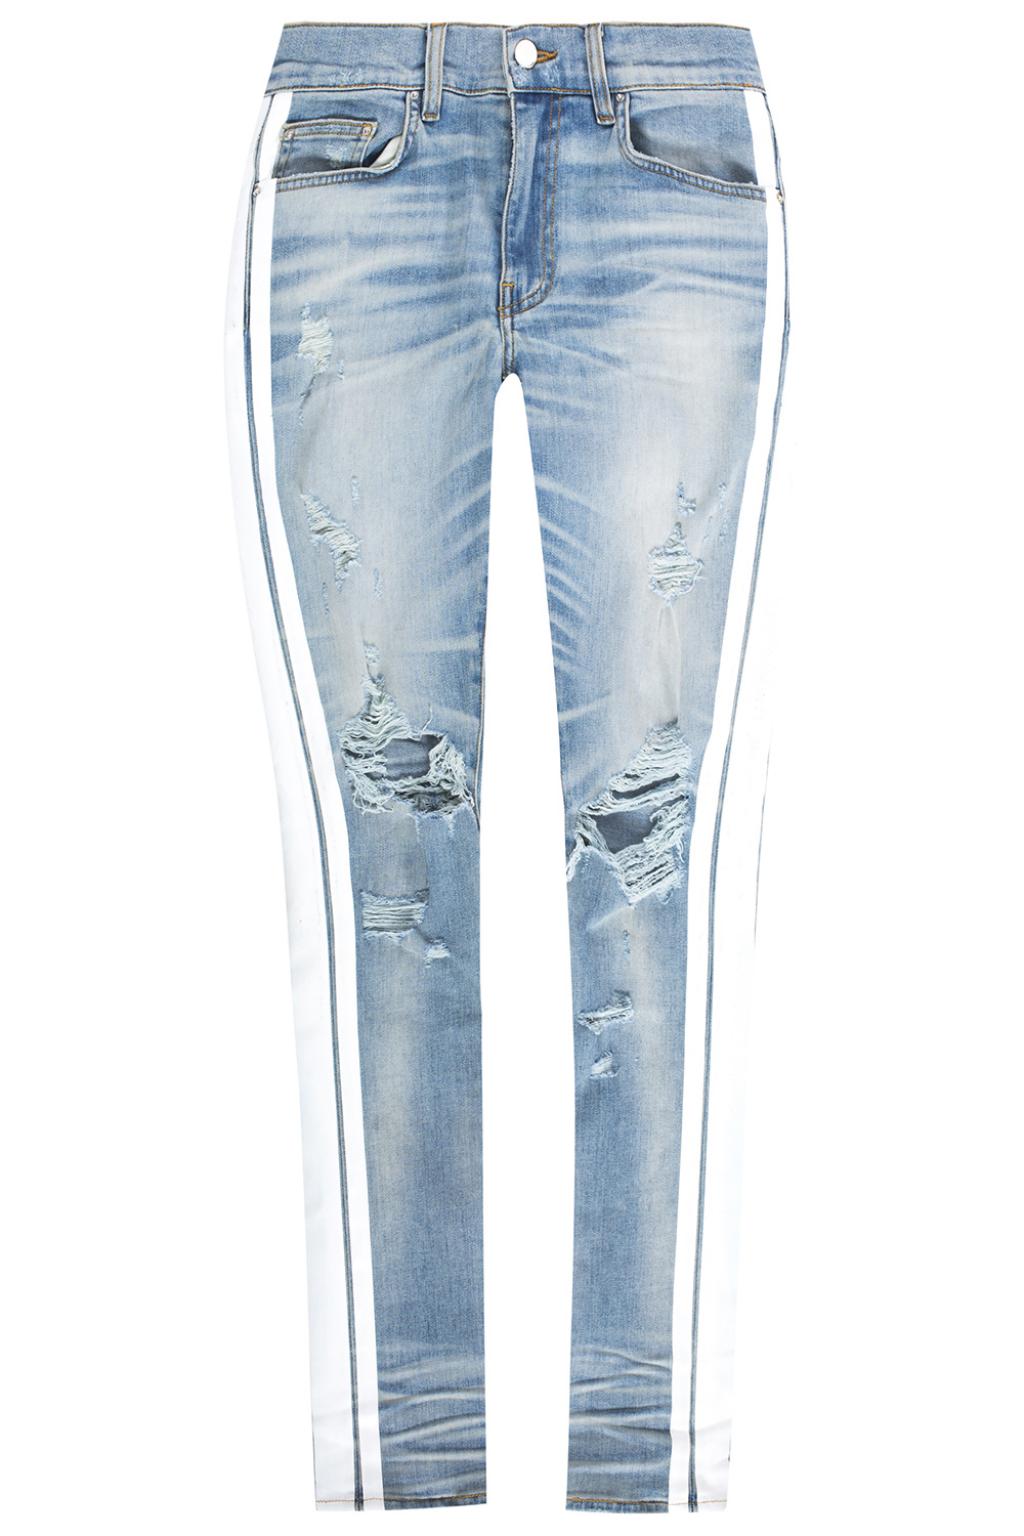 amiri jeans for kids